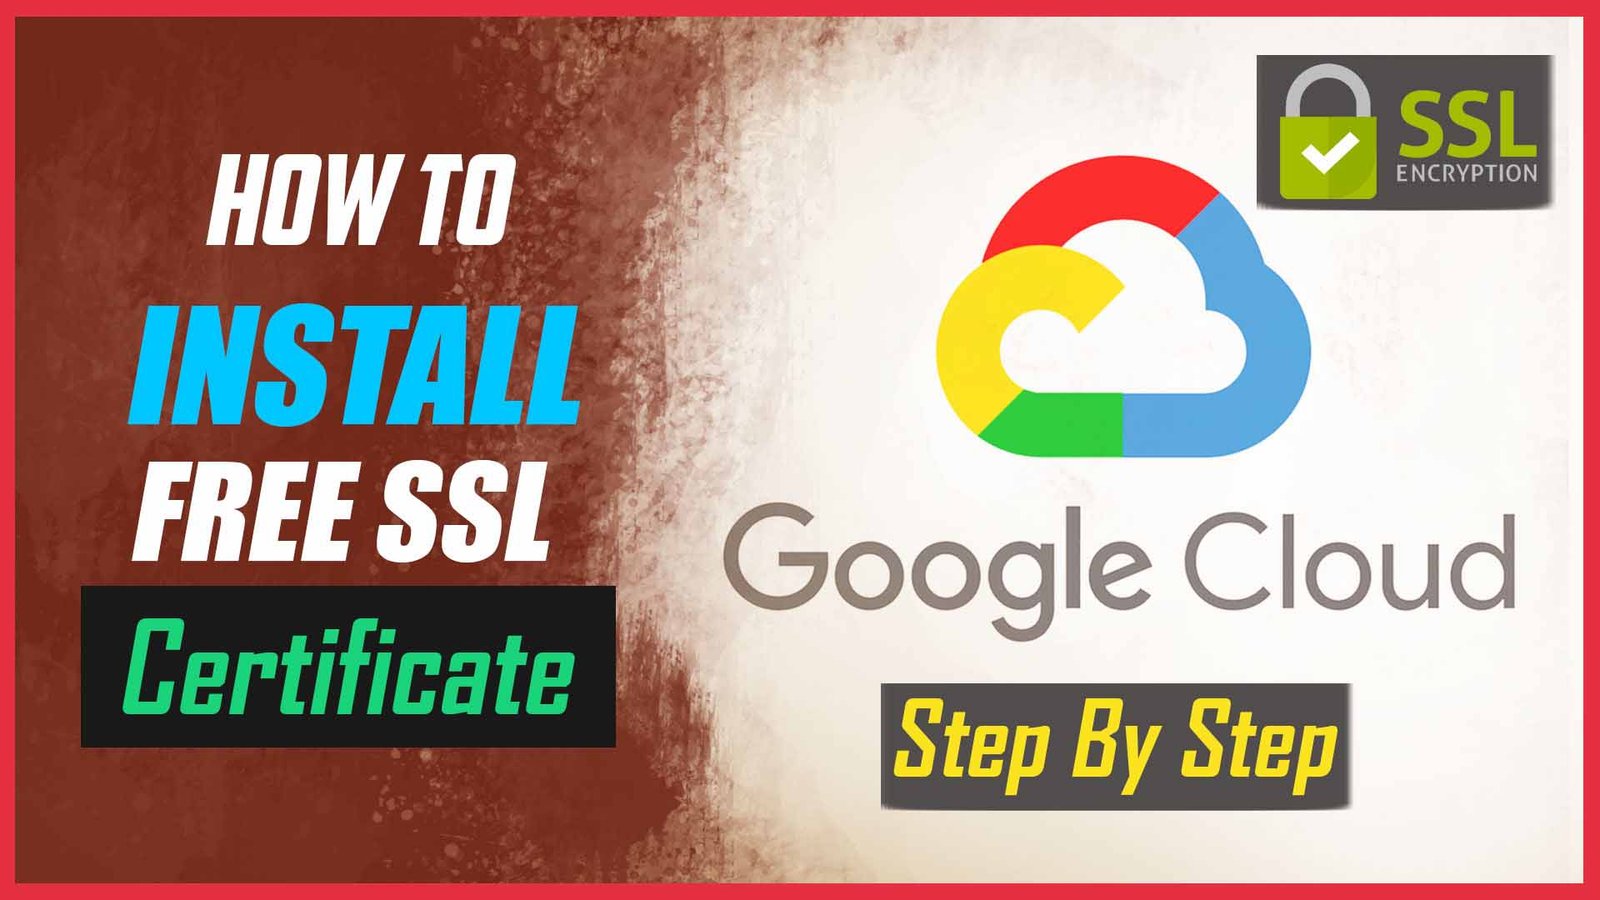 install free SSL certificate -bitnami wordpress-Google cloud platform - letsencrypt renew